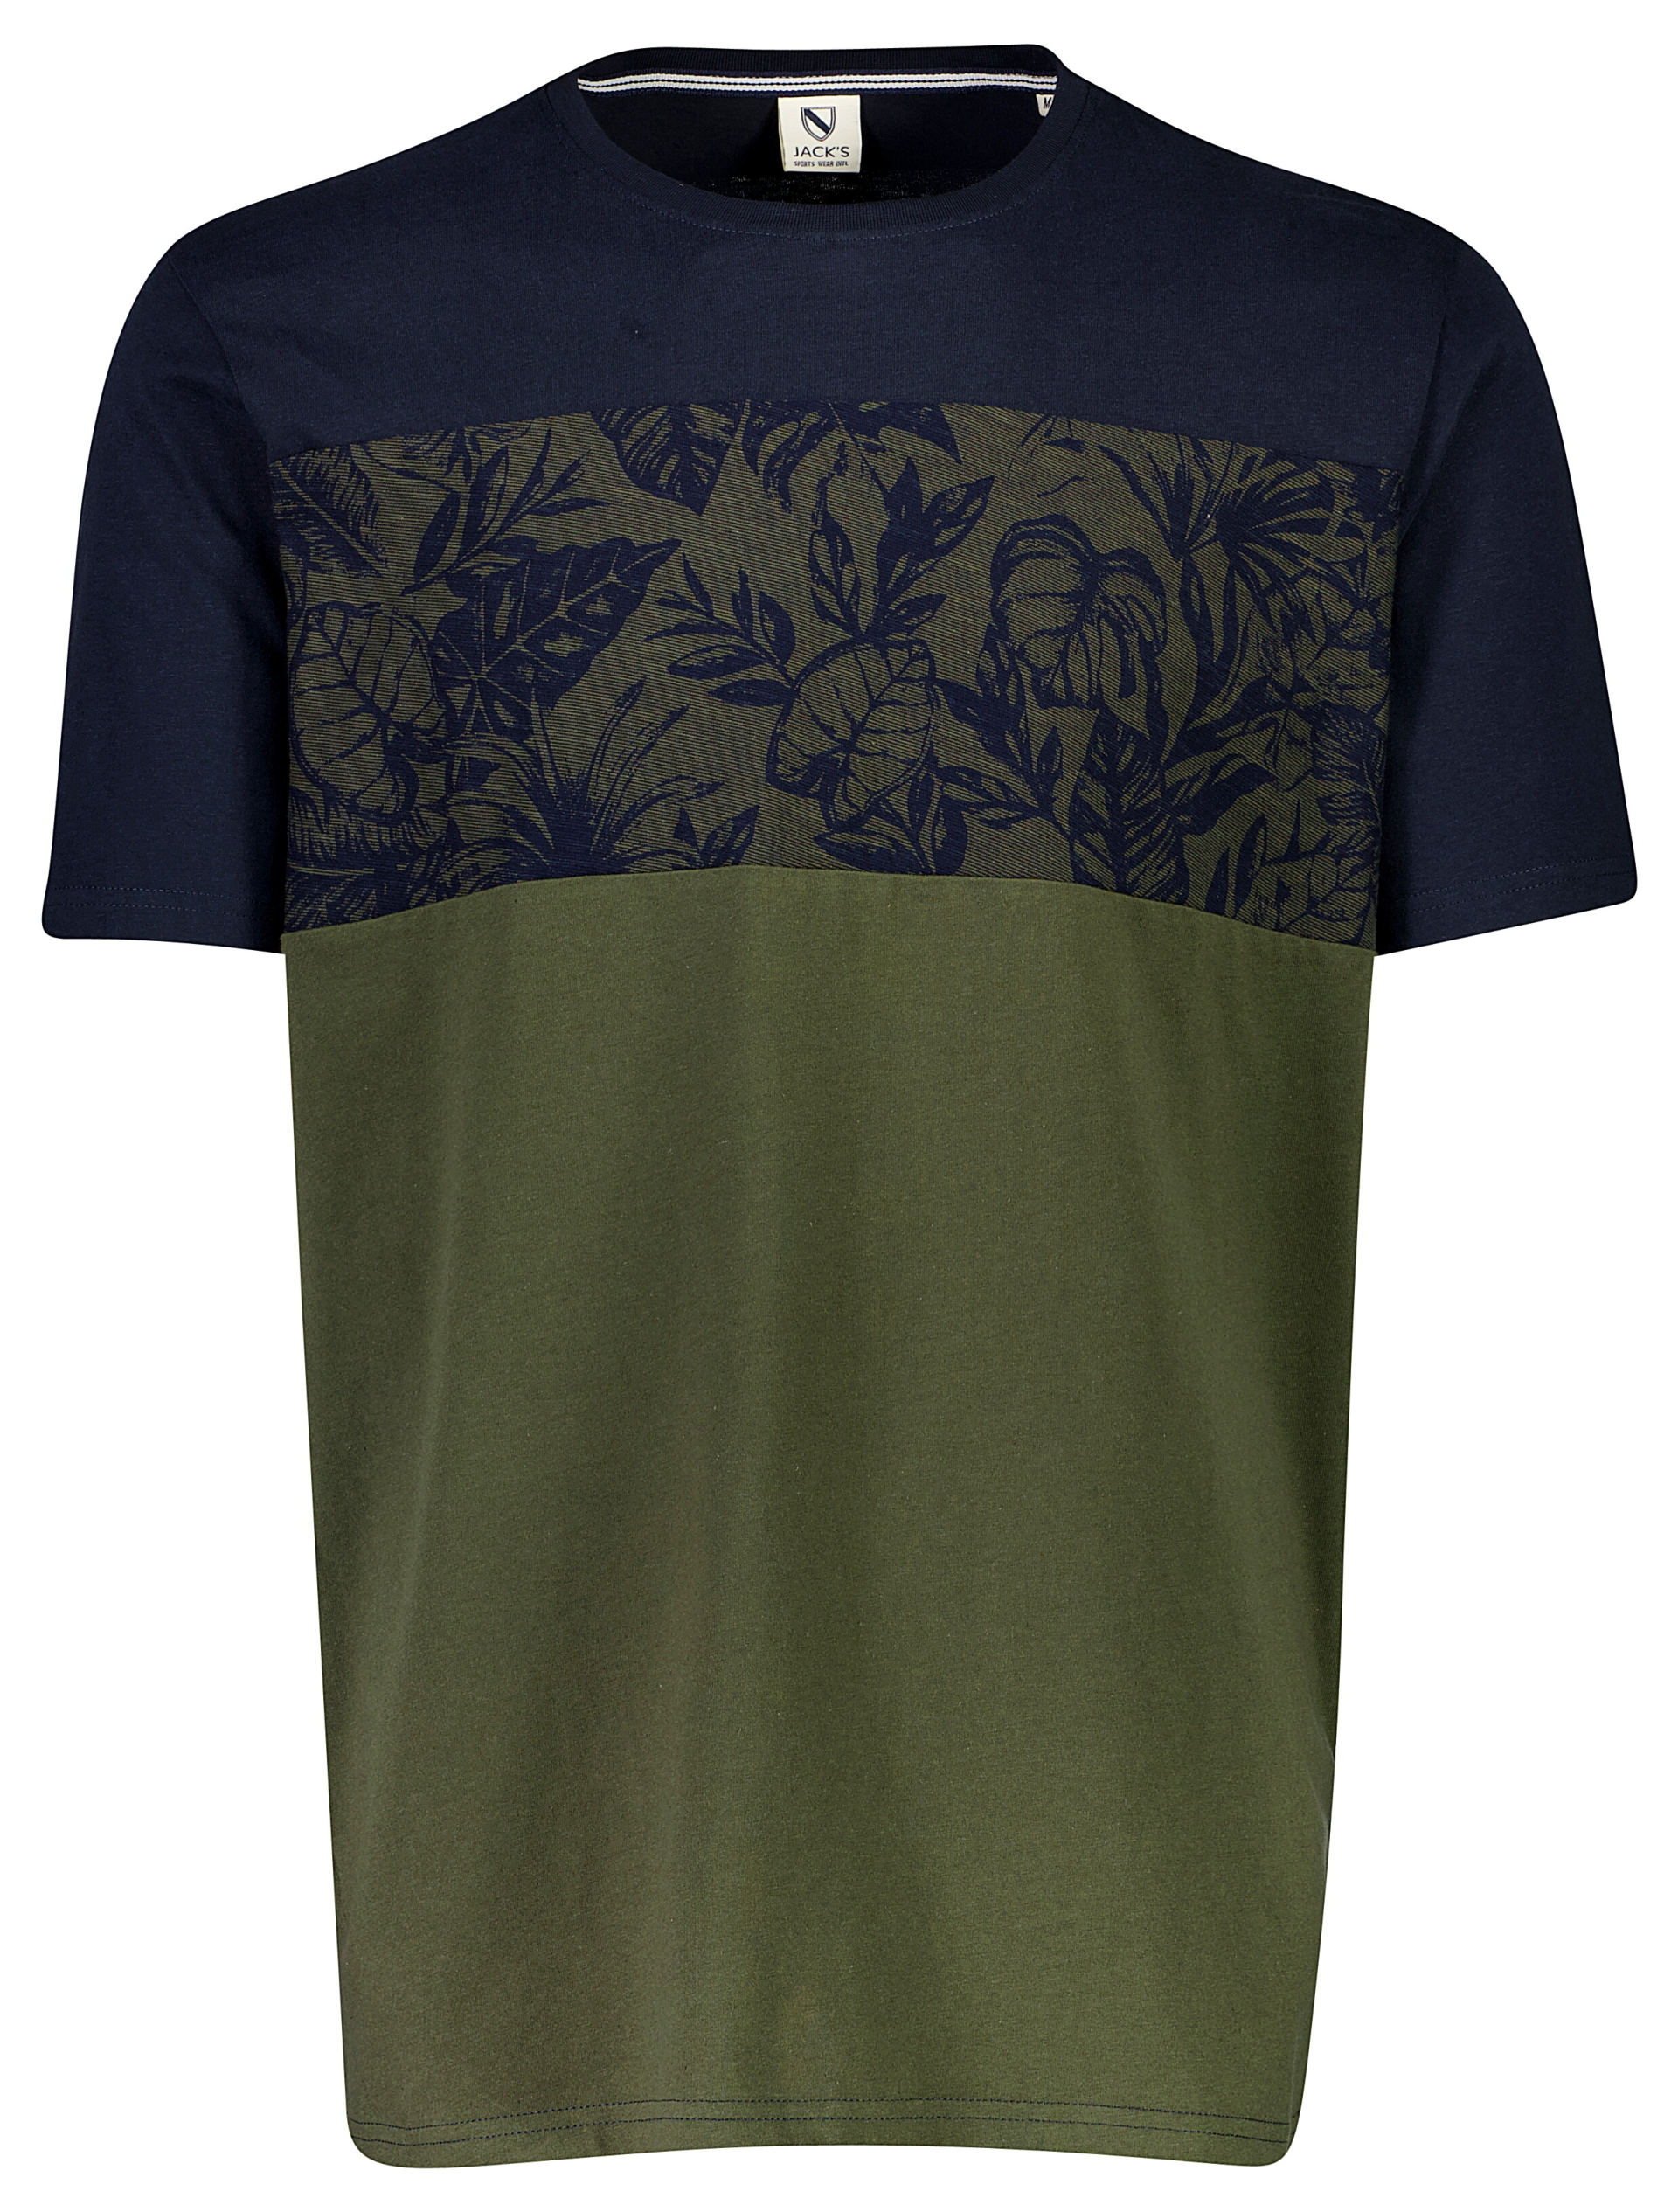 Jack's T-shirt grön / army